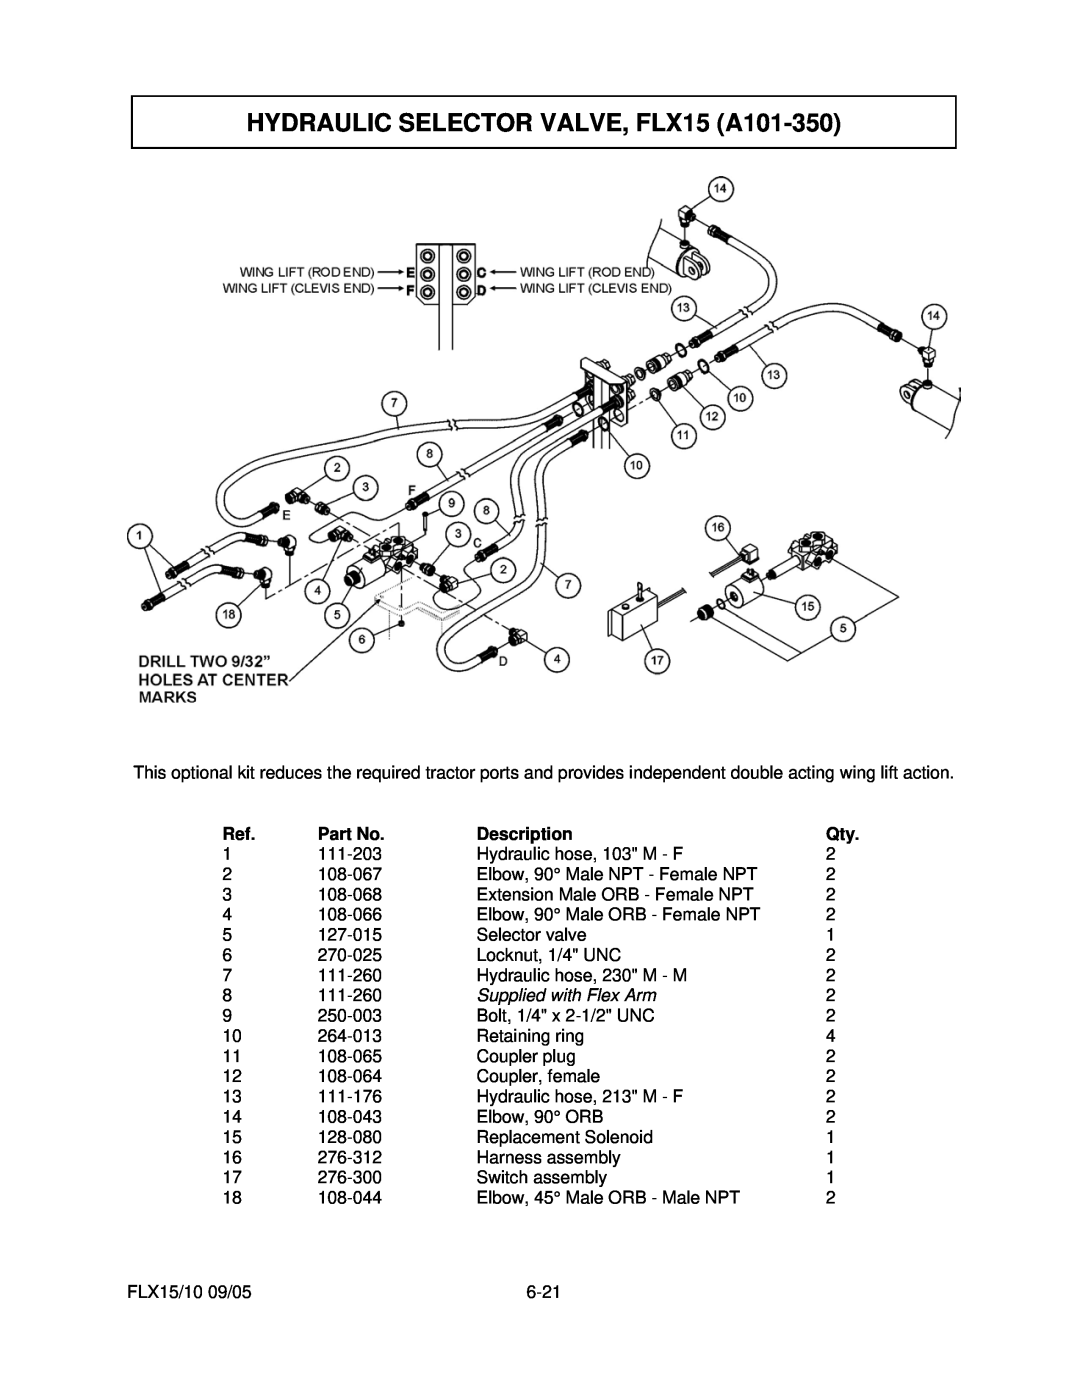 Tiger Mowers FLX10 manual HYDRAULIC SELECTOR VALVE, FLX15 A101-350, Part No, Description 